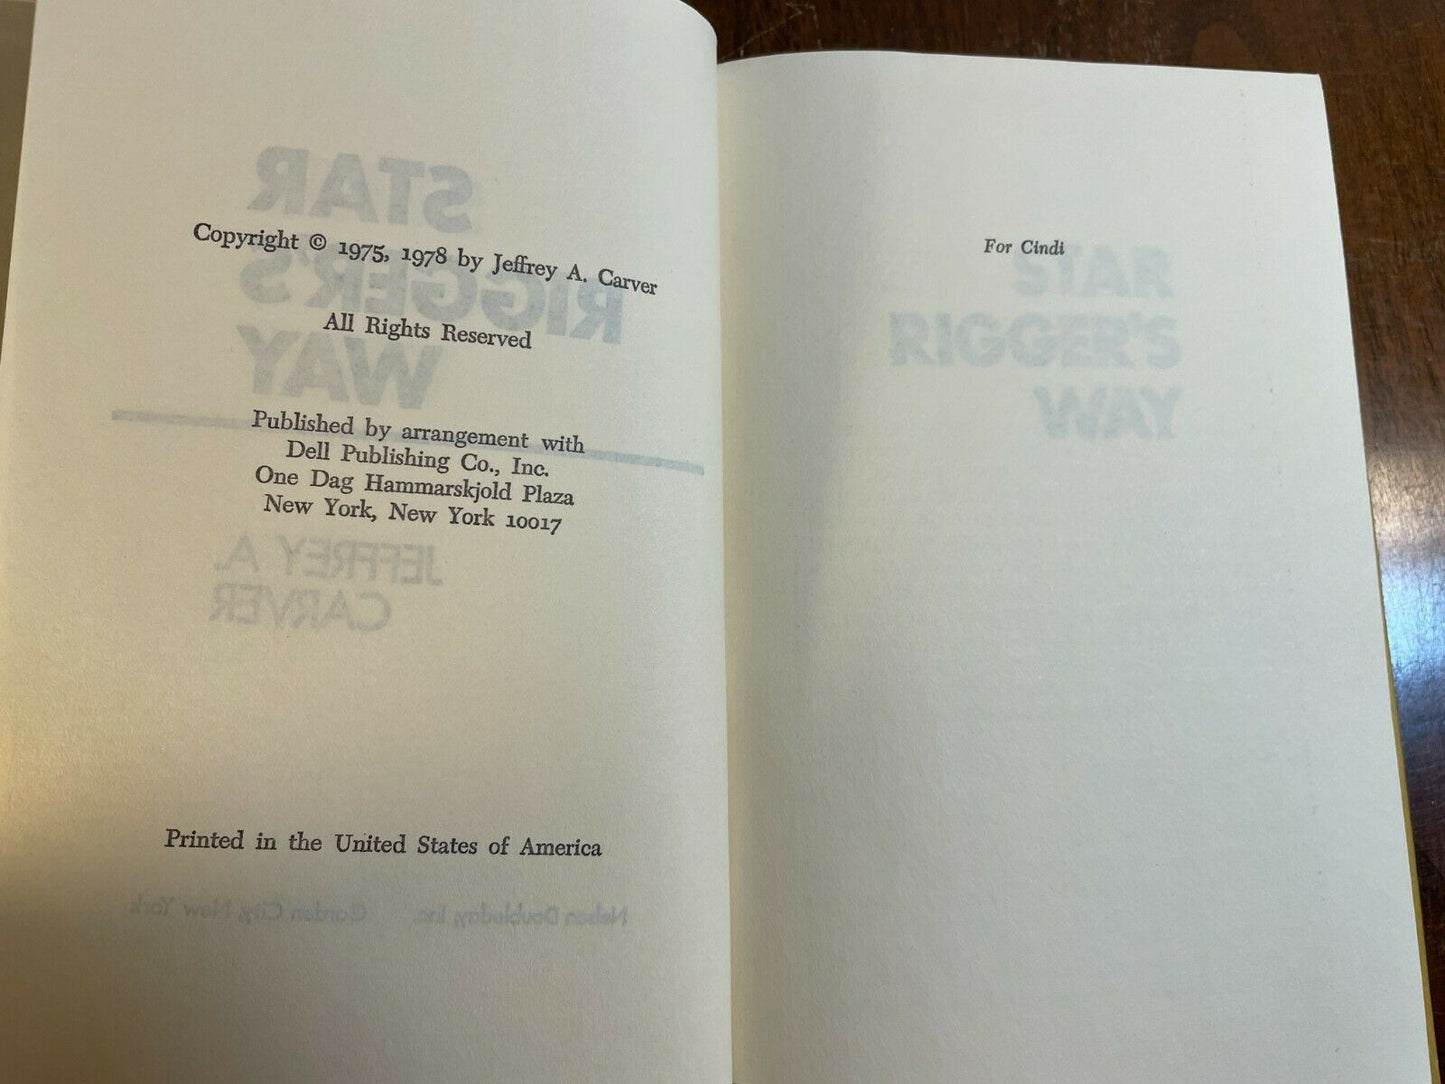 STAR RIGGERS WAY, Jeffrey A. Carver | 1978 Book Club Edition